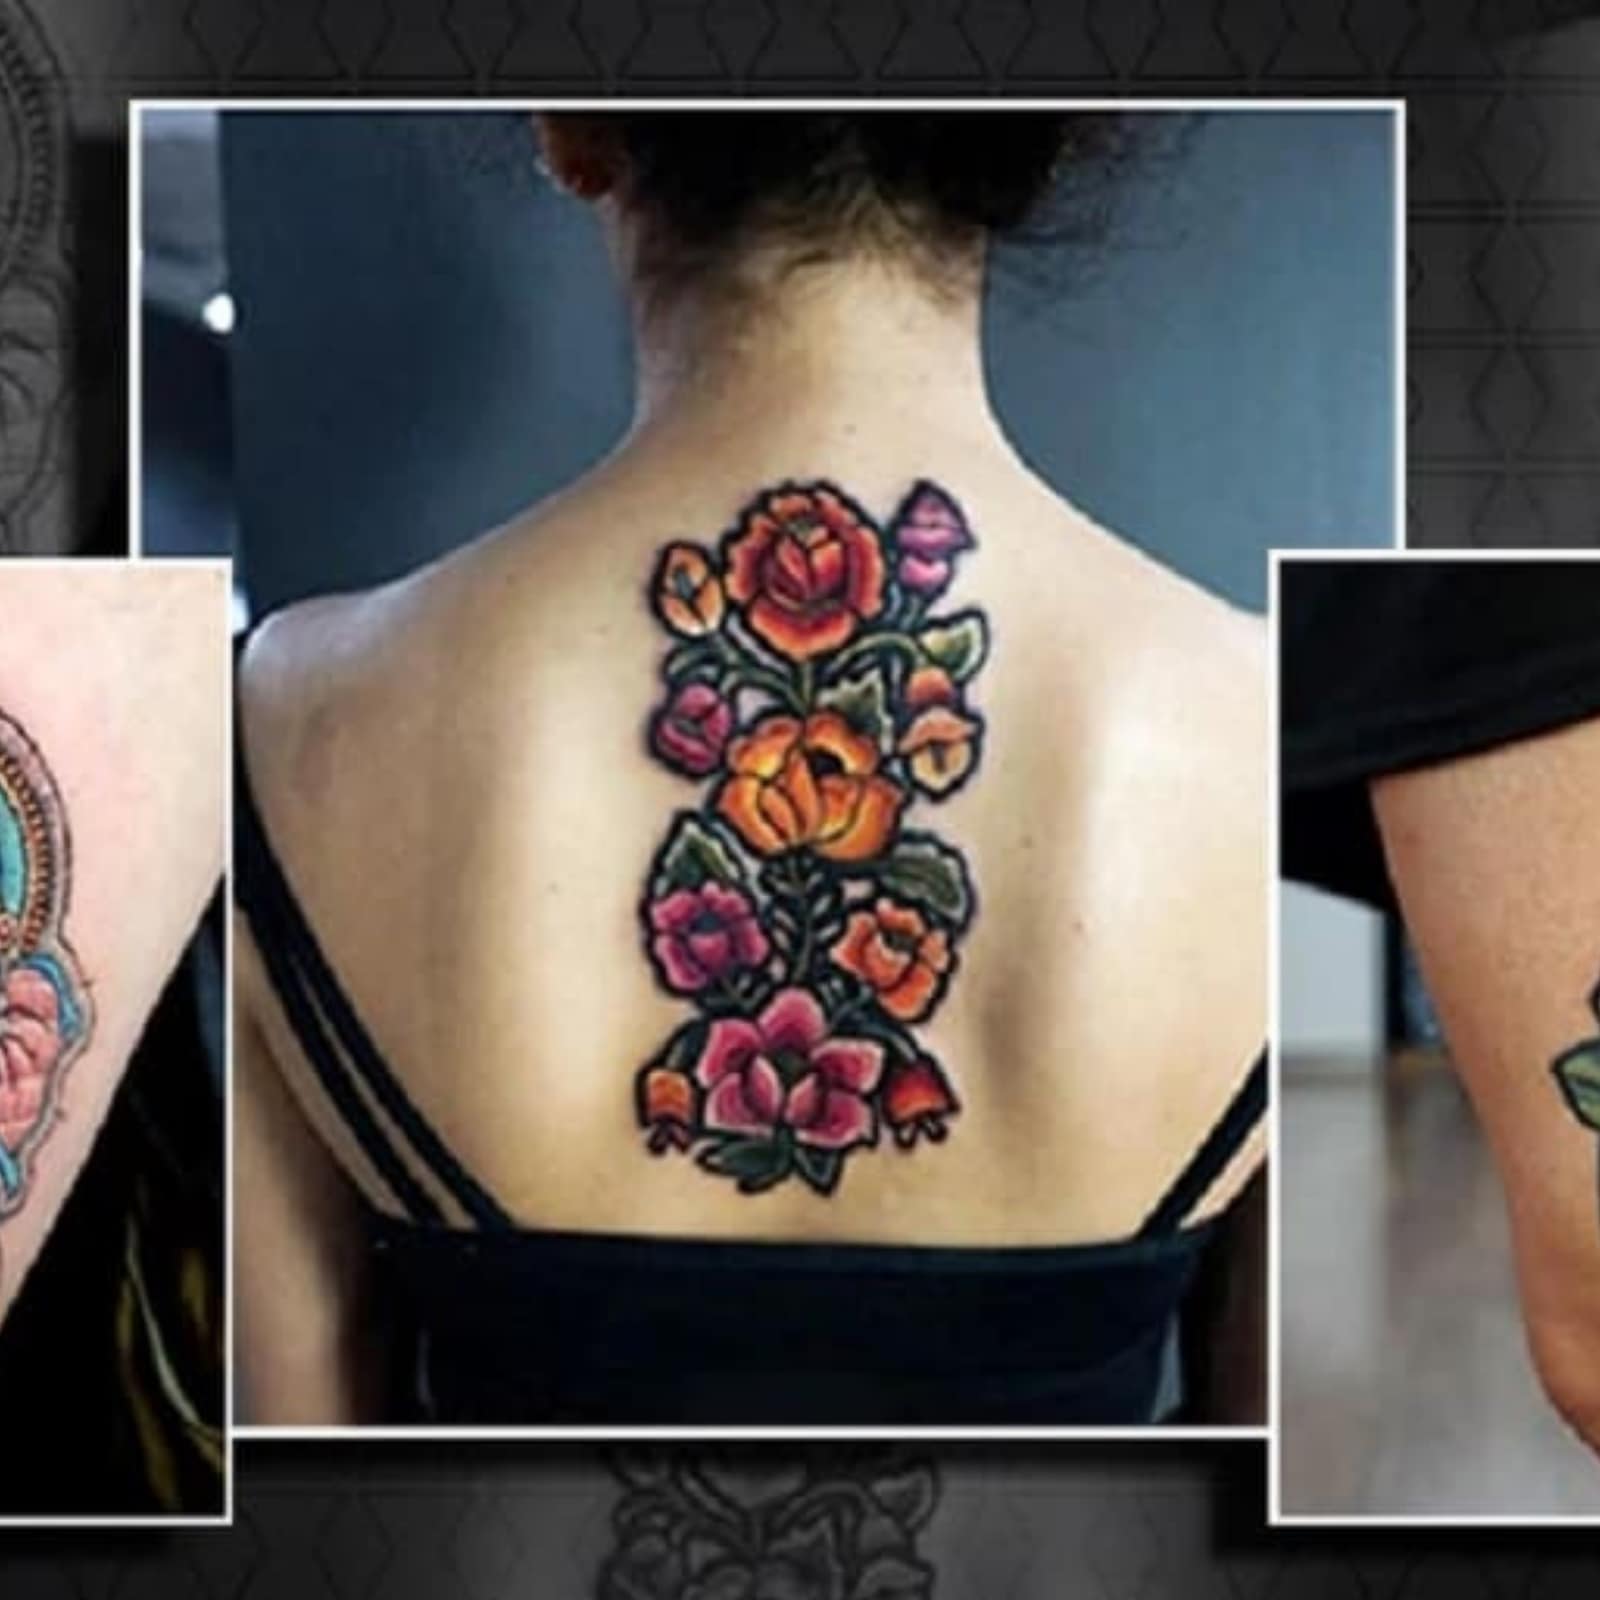 Shoulder Arm Flower Demon Cherry Tattoo by Evil Twins Tattoo